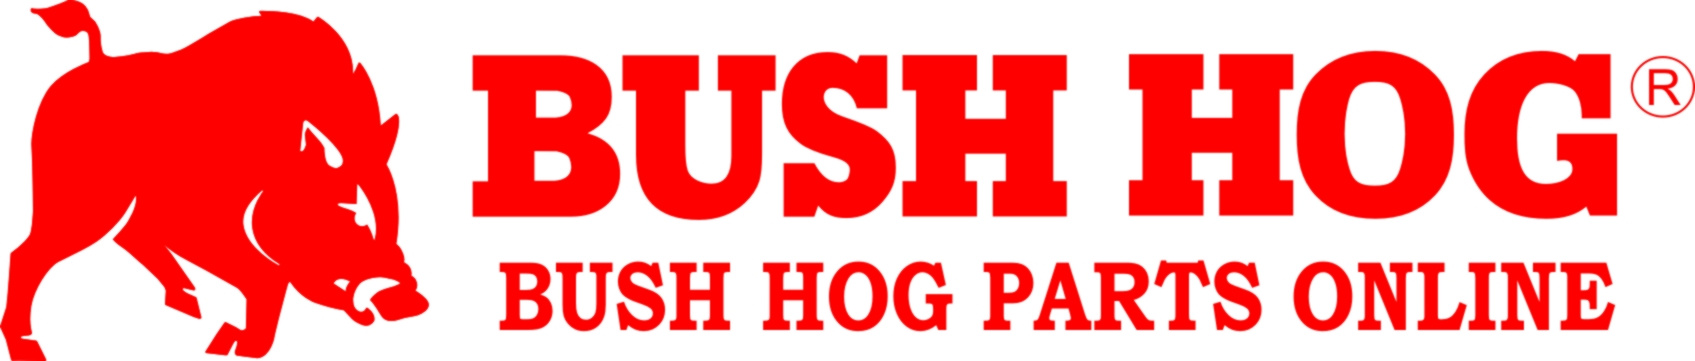 Click to Go to Bush Hog Online Parts